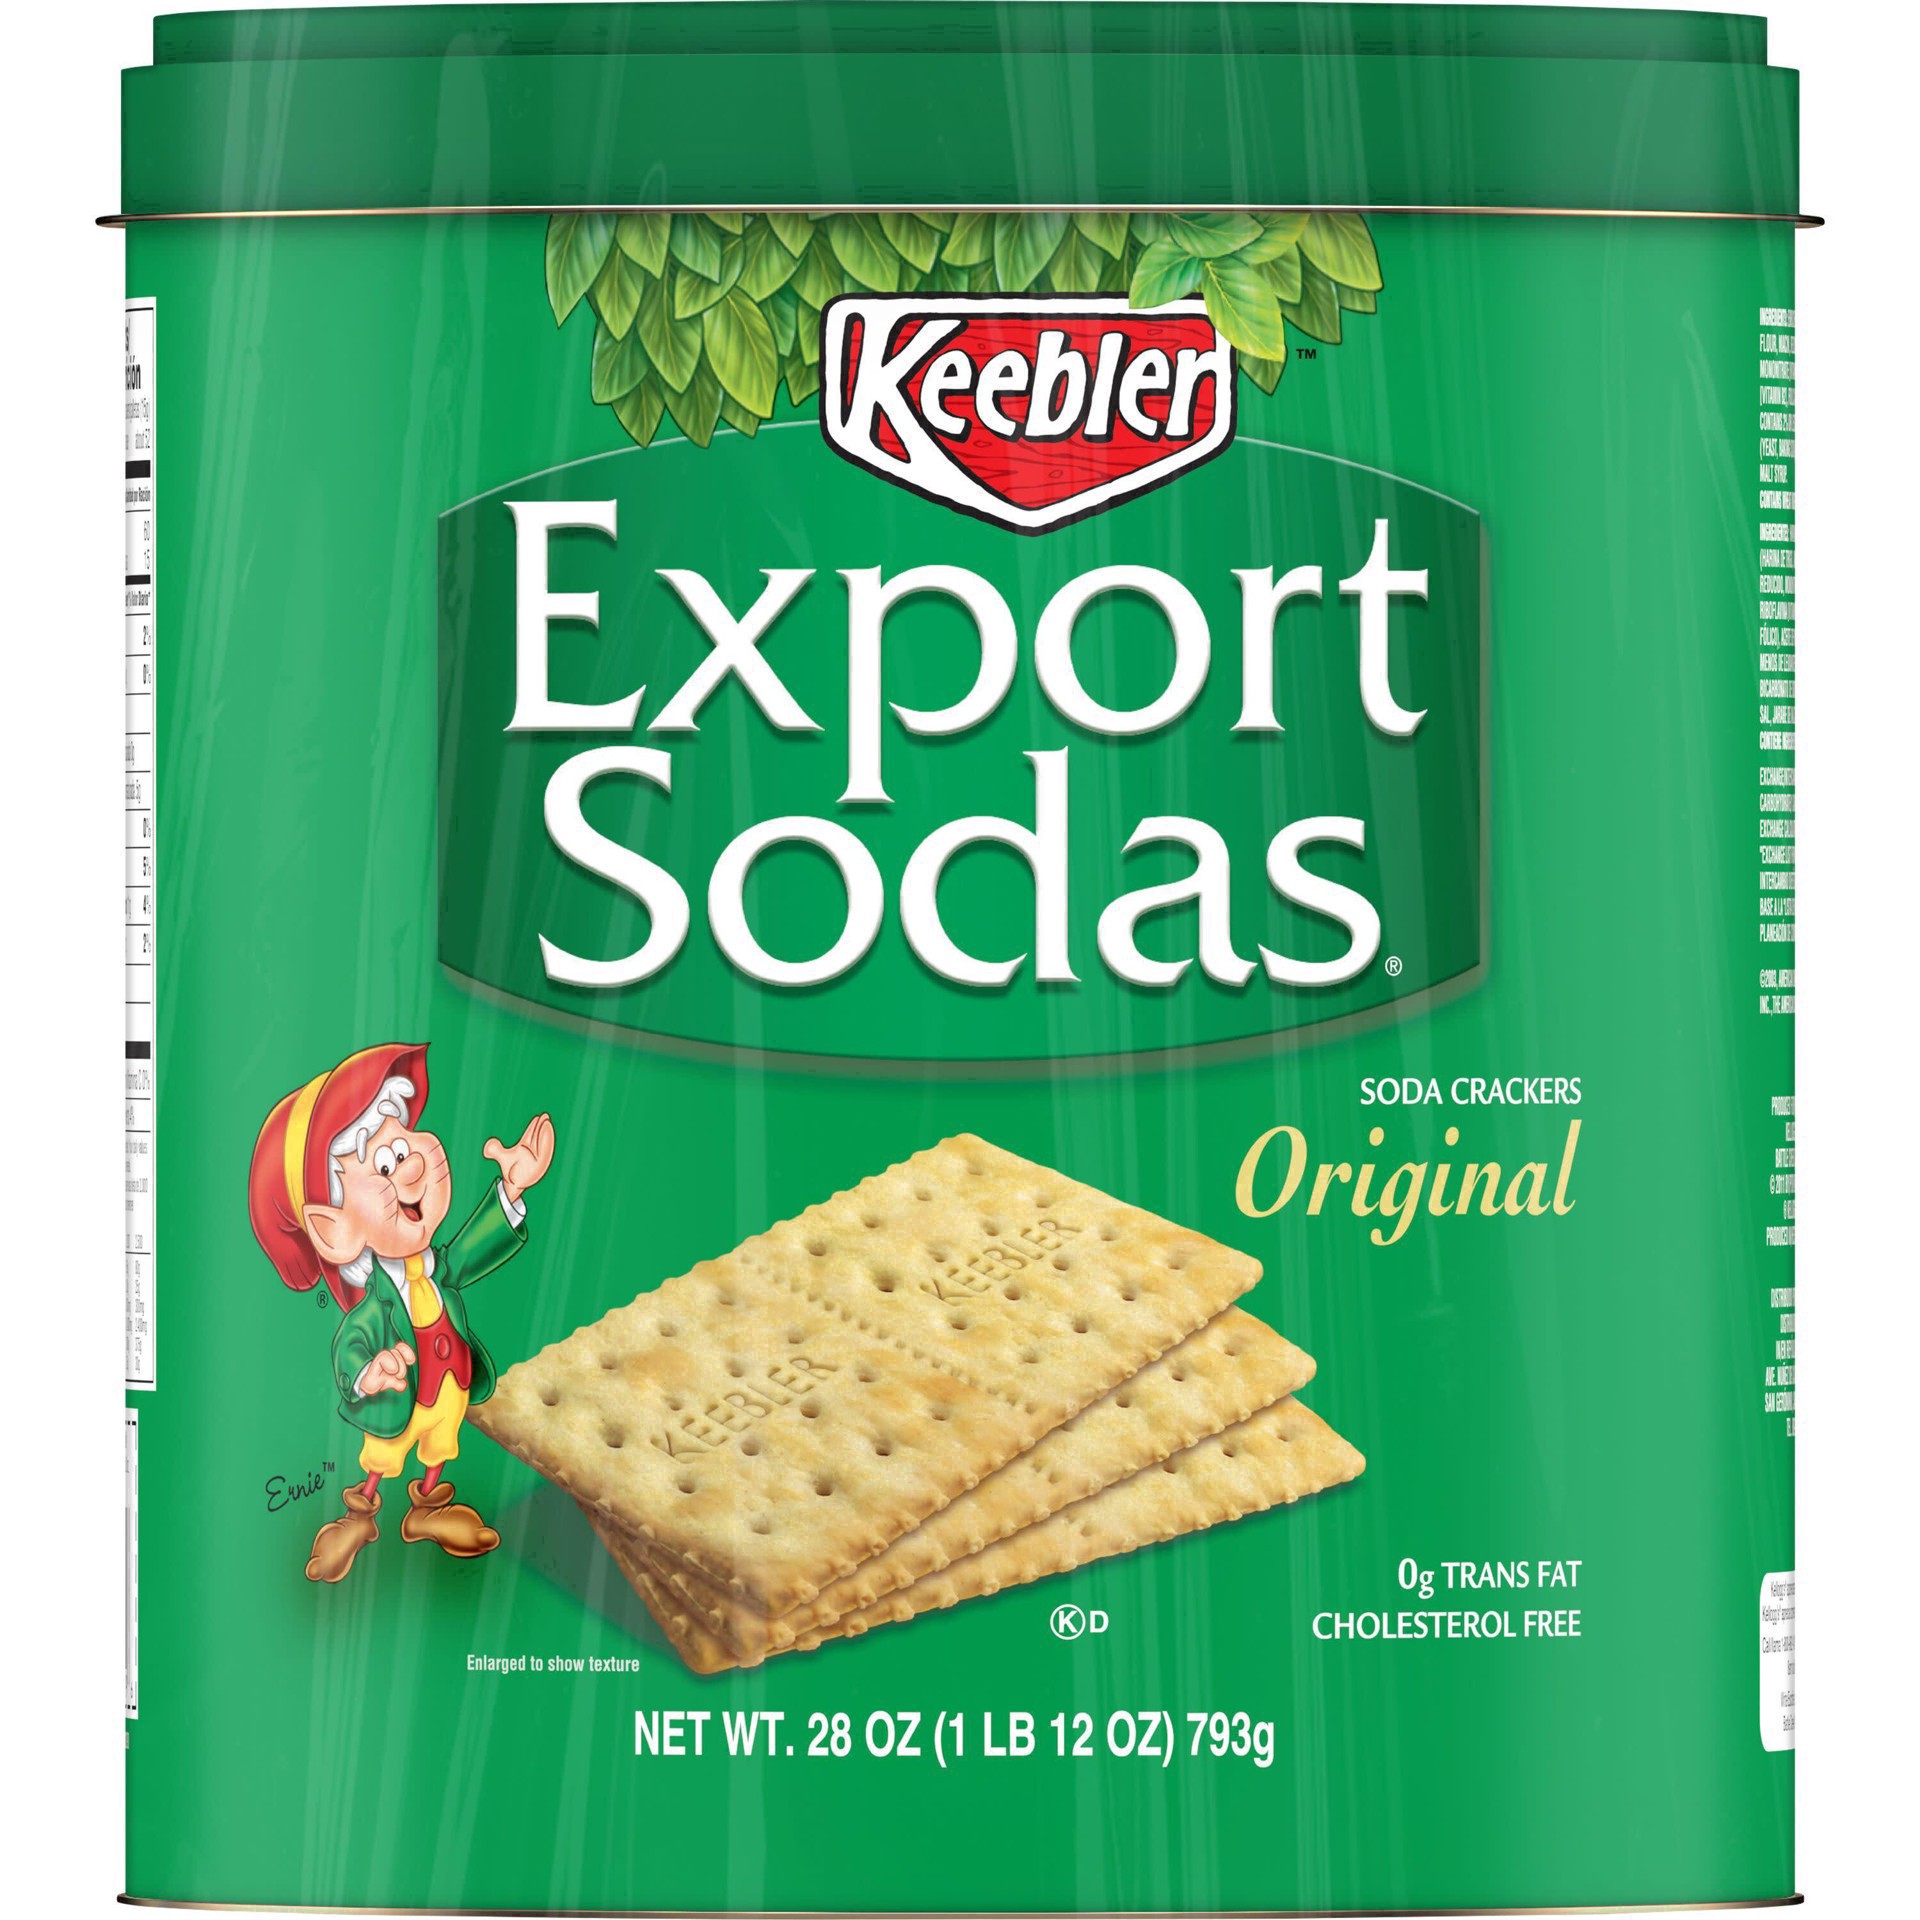 slide 41 of 63, Keebler Export Sodas Soda Crackers, Original, 28 oz, 28 oz